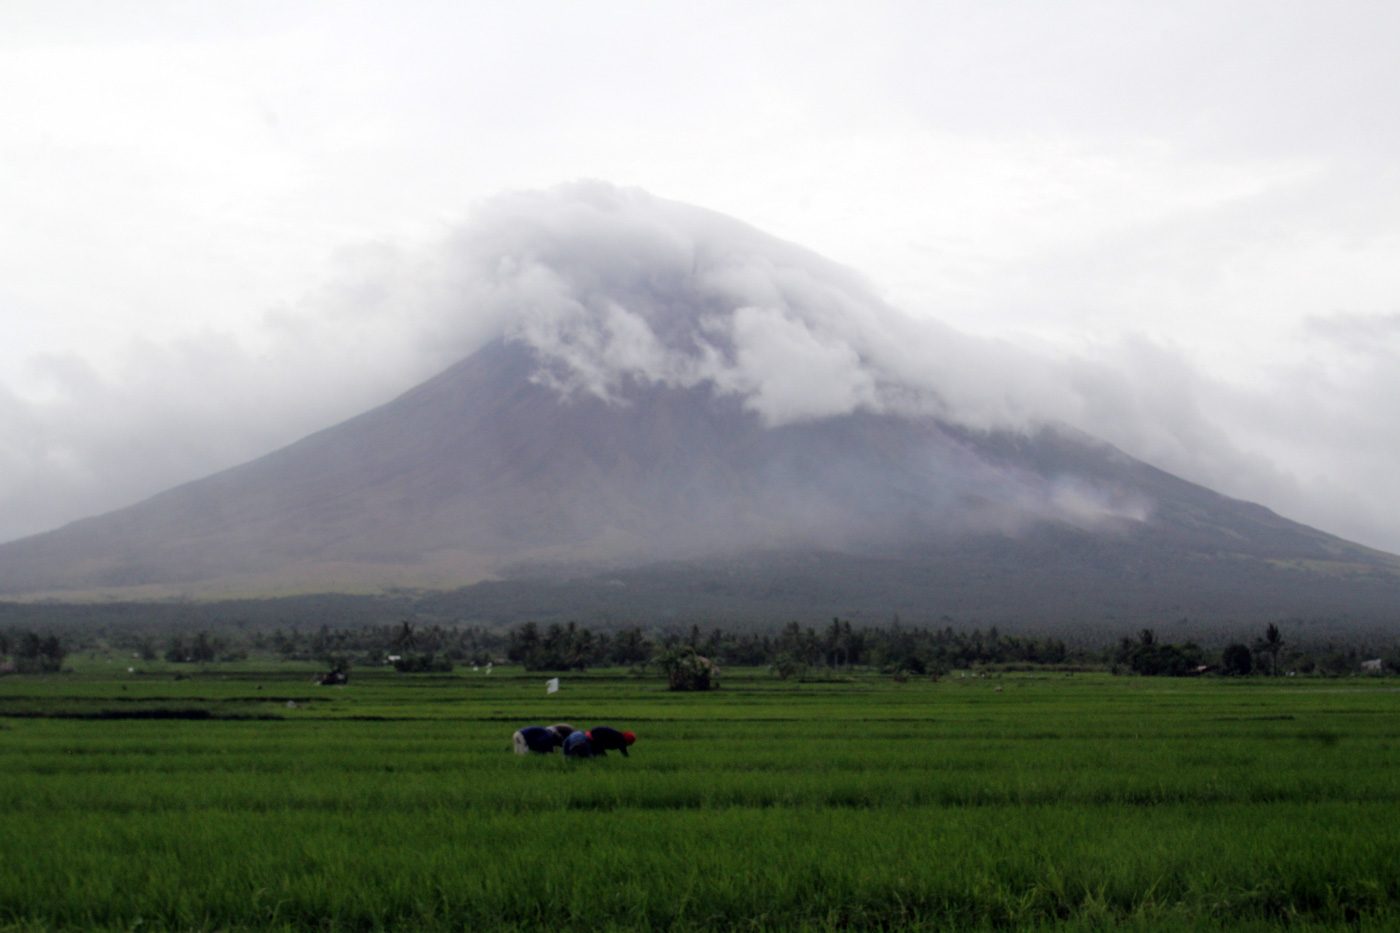 Mayon lava flow advances 3 kilometers, endangering farmers in ‘no man’s land’